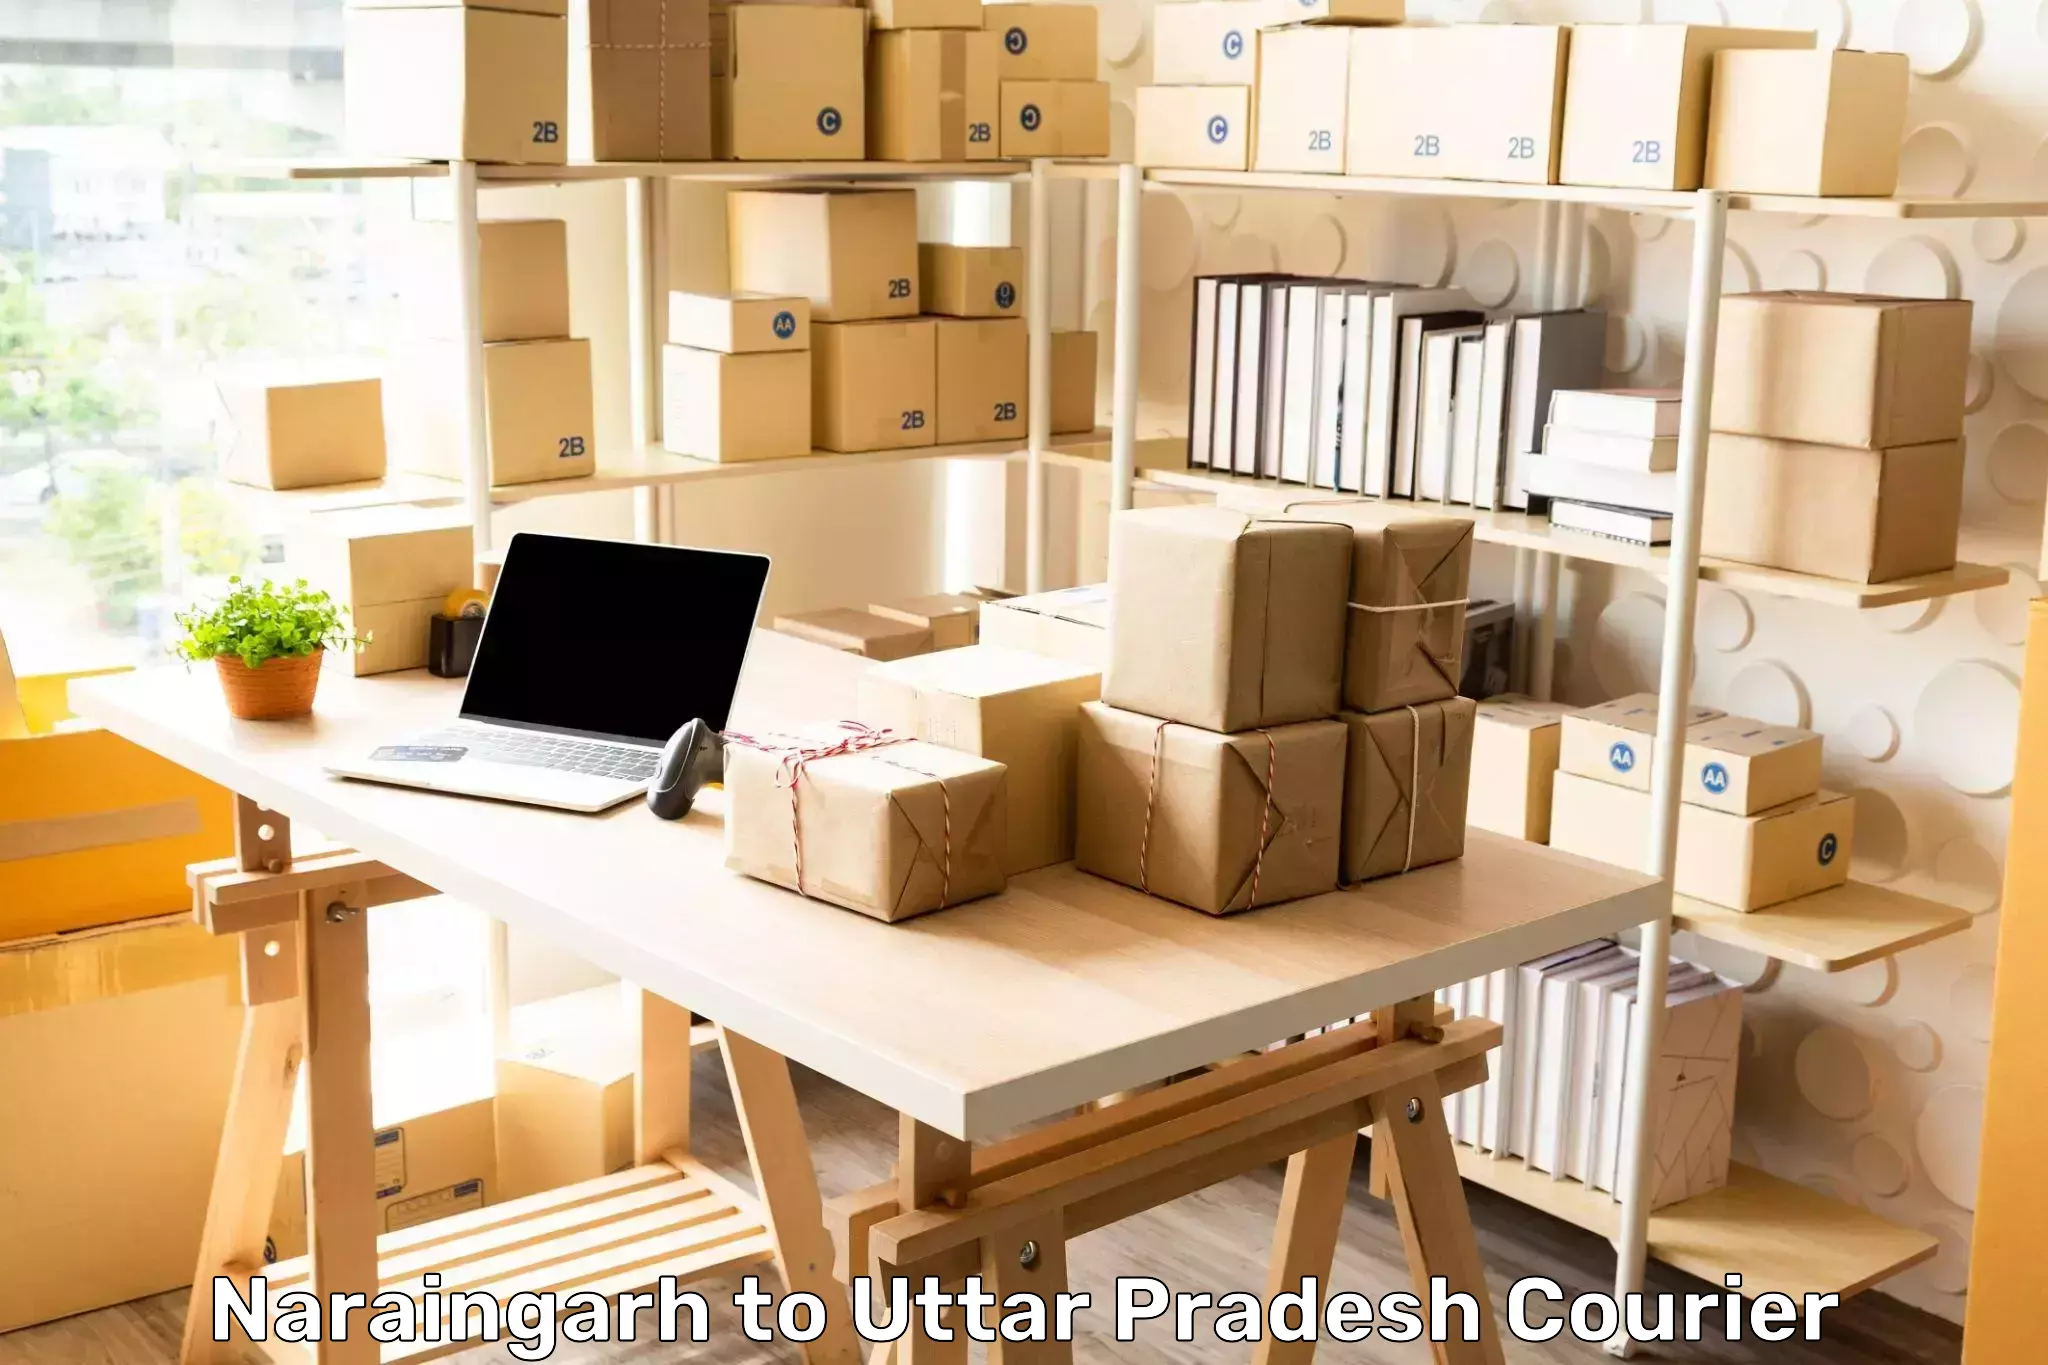 Nationwide parcel services Naraingarh to Sirathu